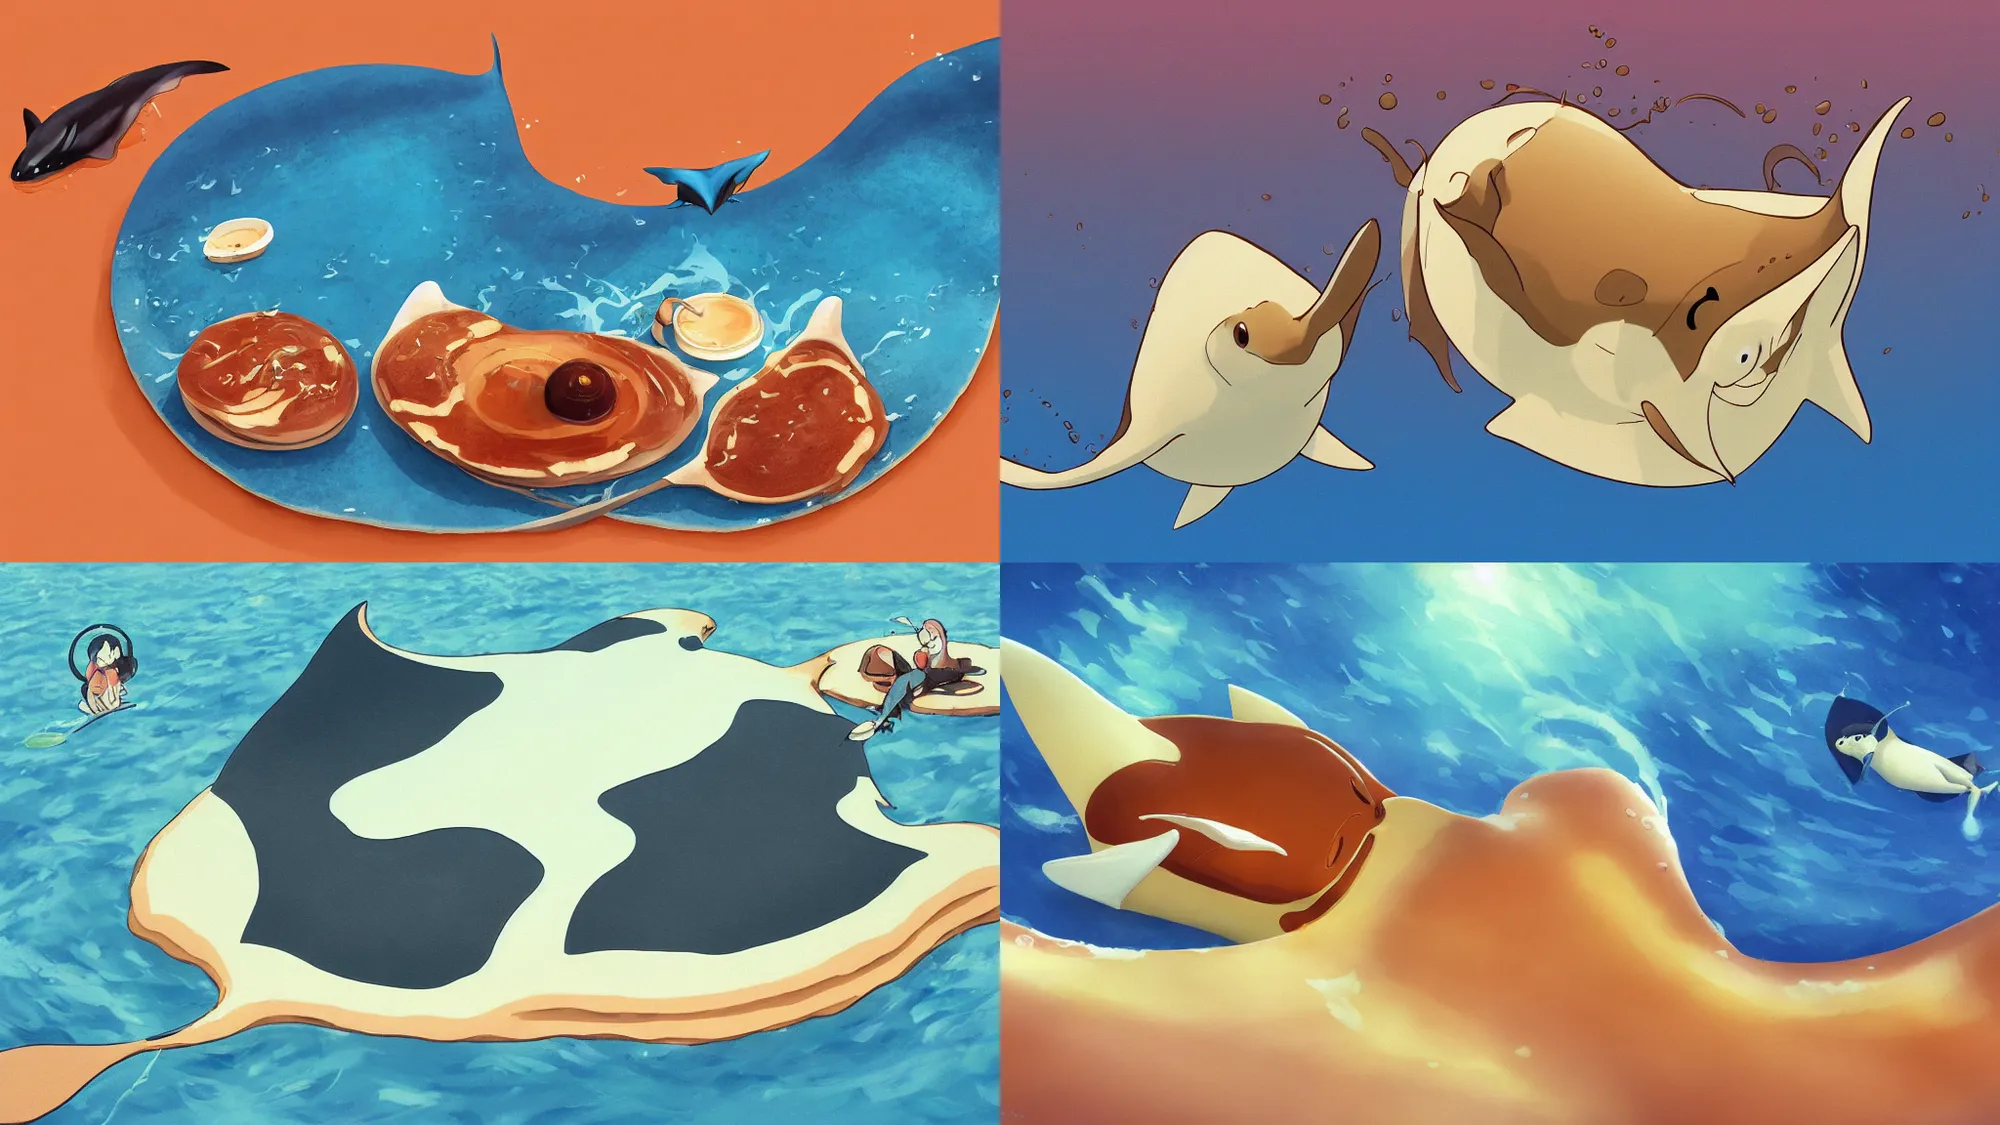 Prompt: painting of a happy flat pancake manta ray swimming in syrup, cute, 4 k, manta ray made of pancake, fantasy food world, living food adorable pancake, brown atmospheric lighting, by makoto shinkai, studio ghibli, rexie nem